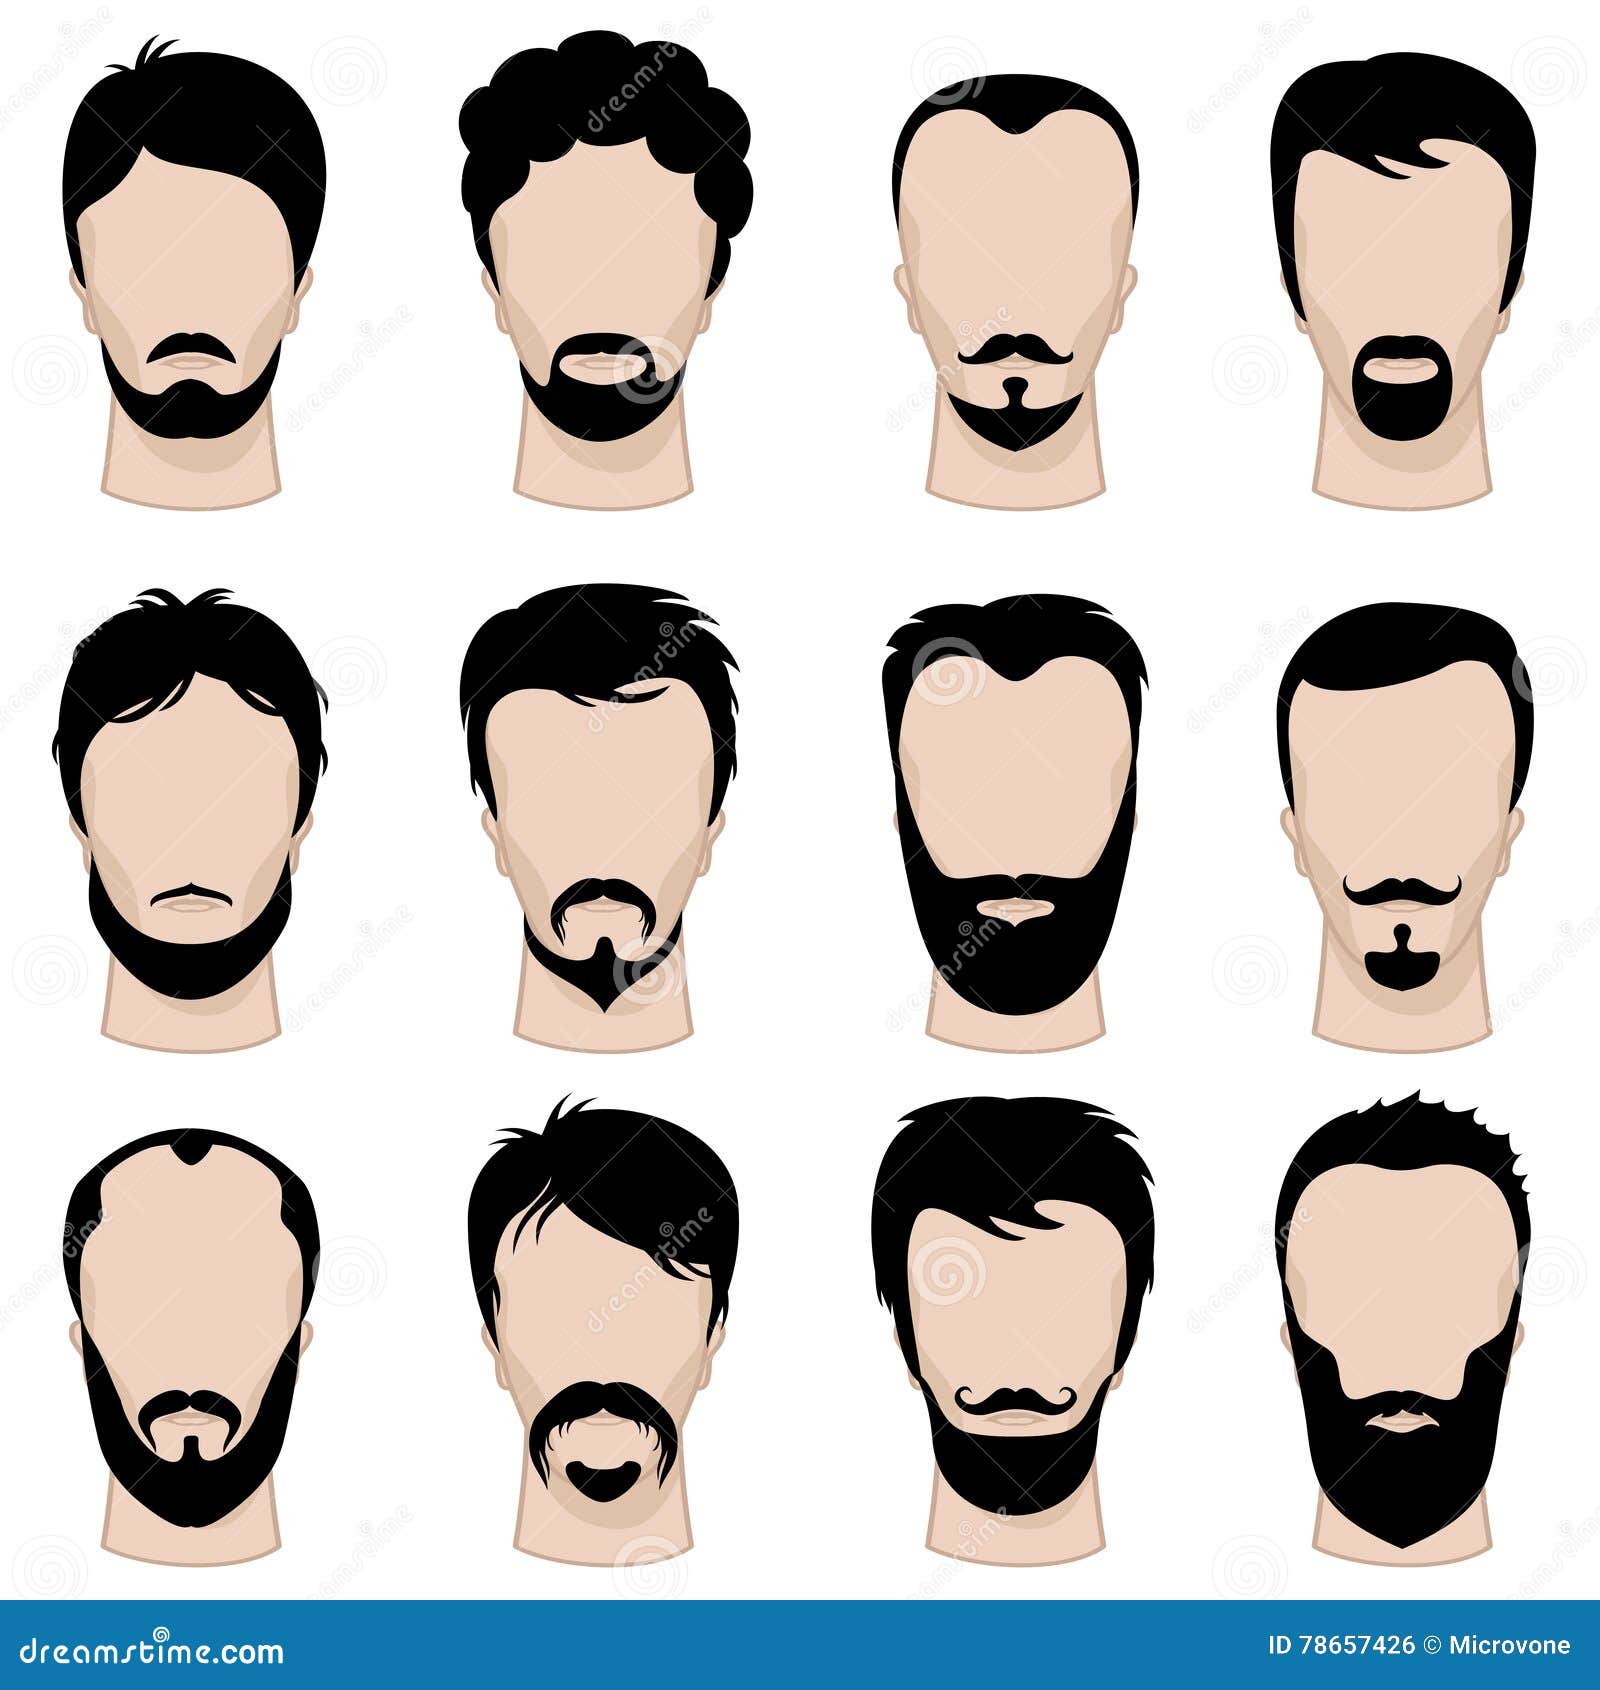 Ten Styles of Beards for Modern Times | Barbershop & Spa